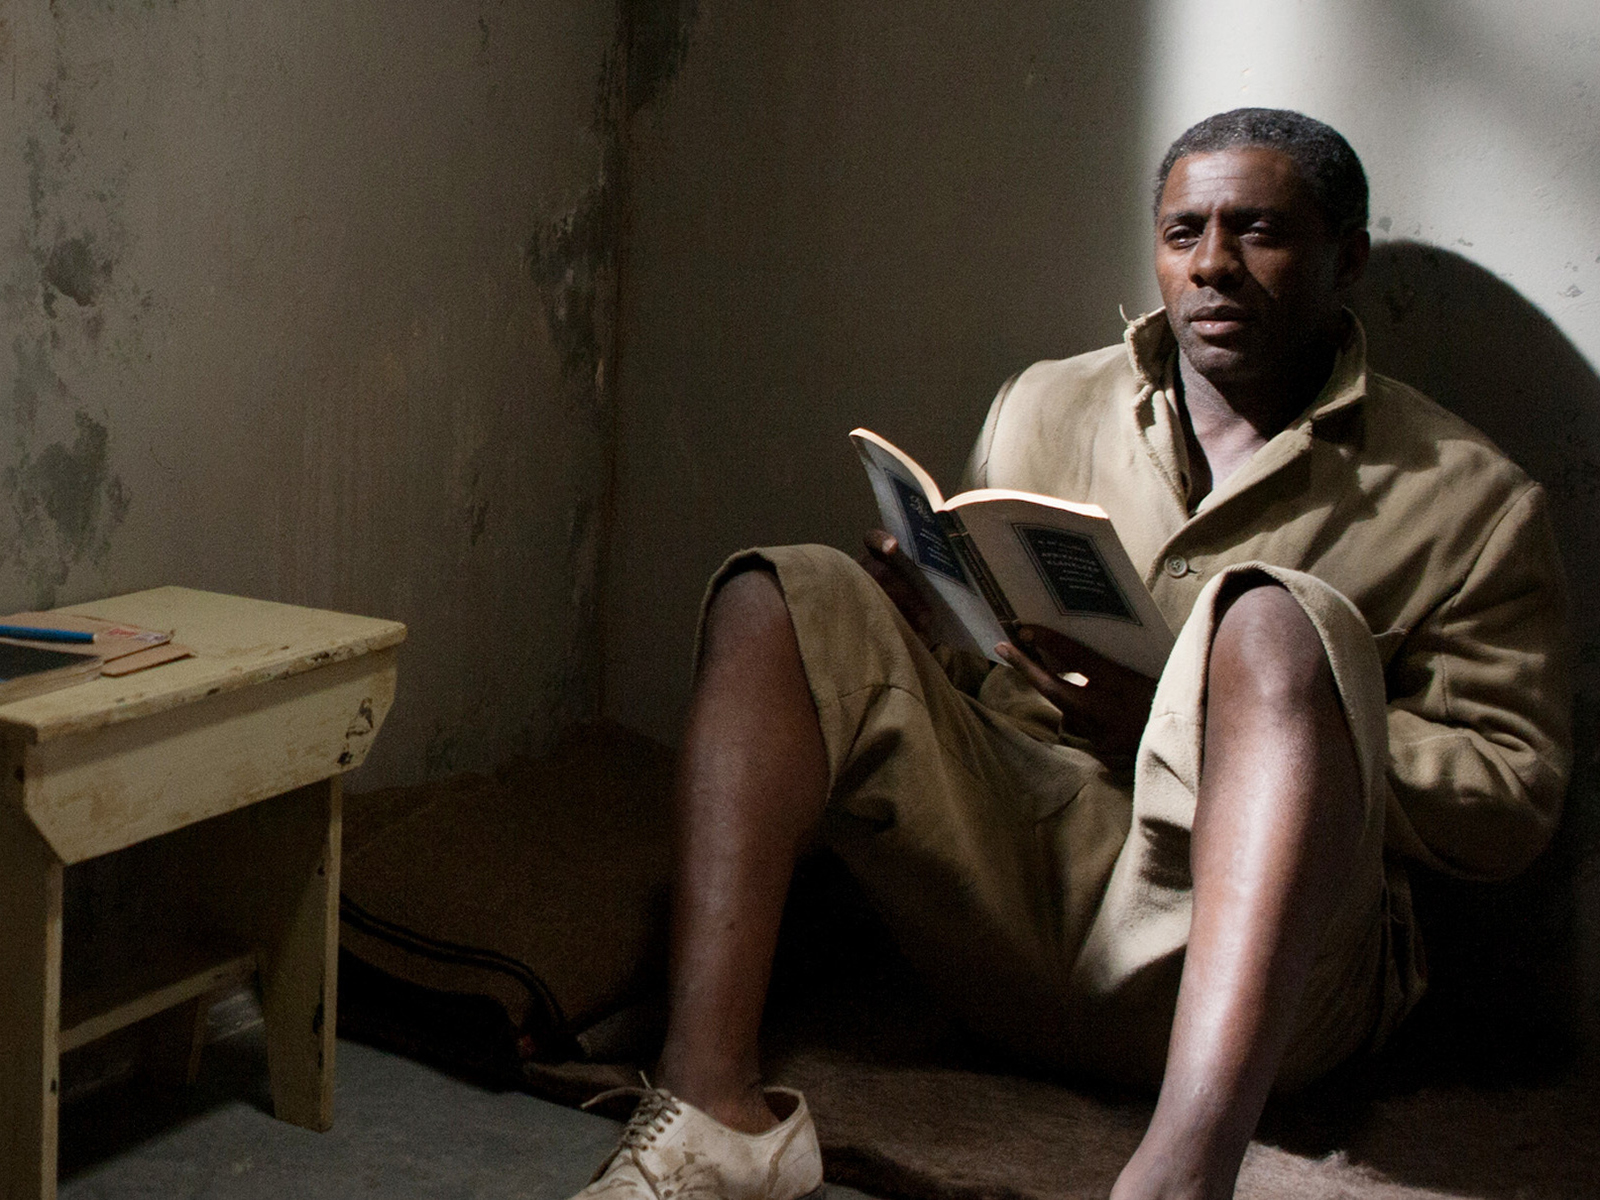 Idris Elba in “Mandela: Long Walk to Freedom” (2013)